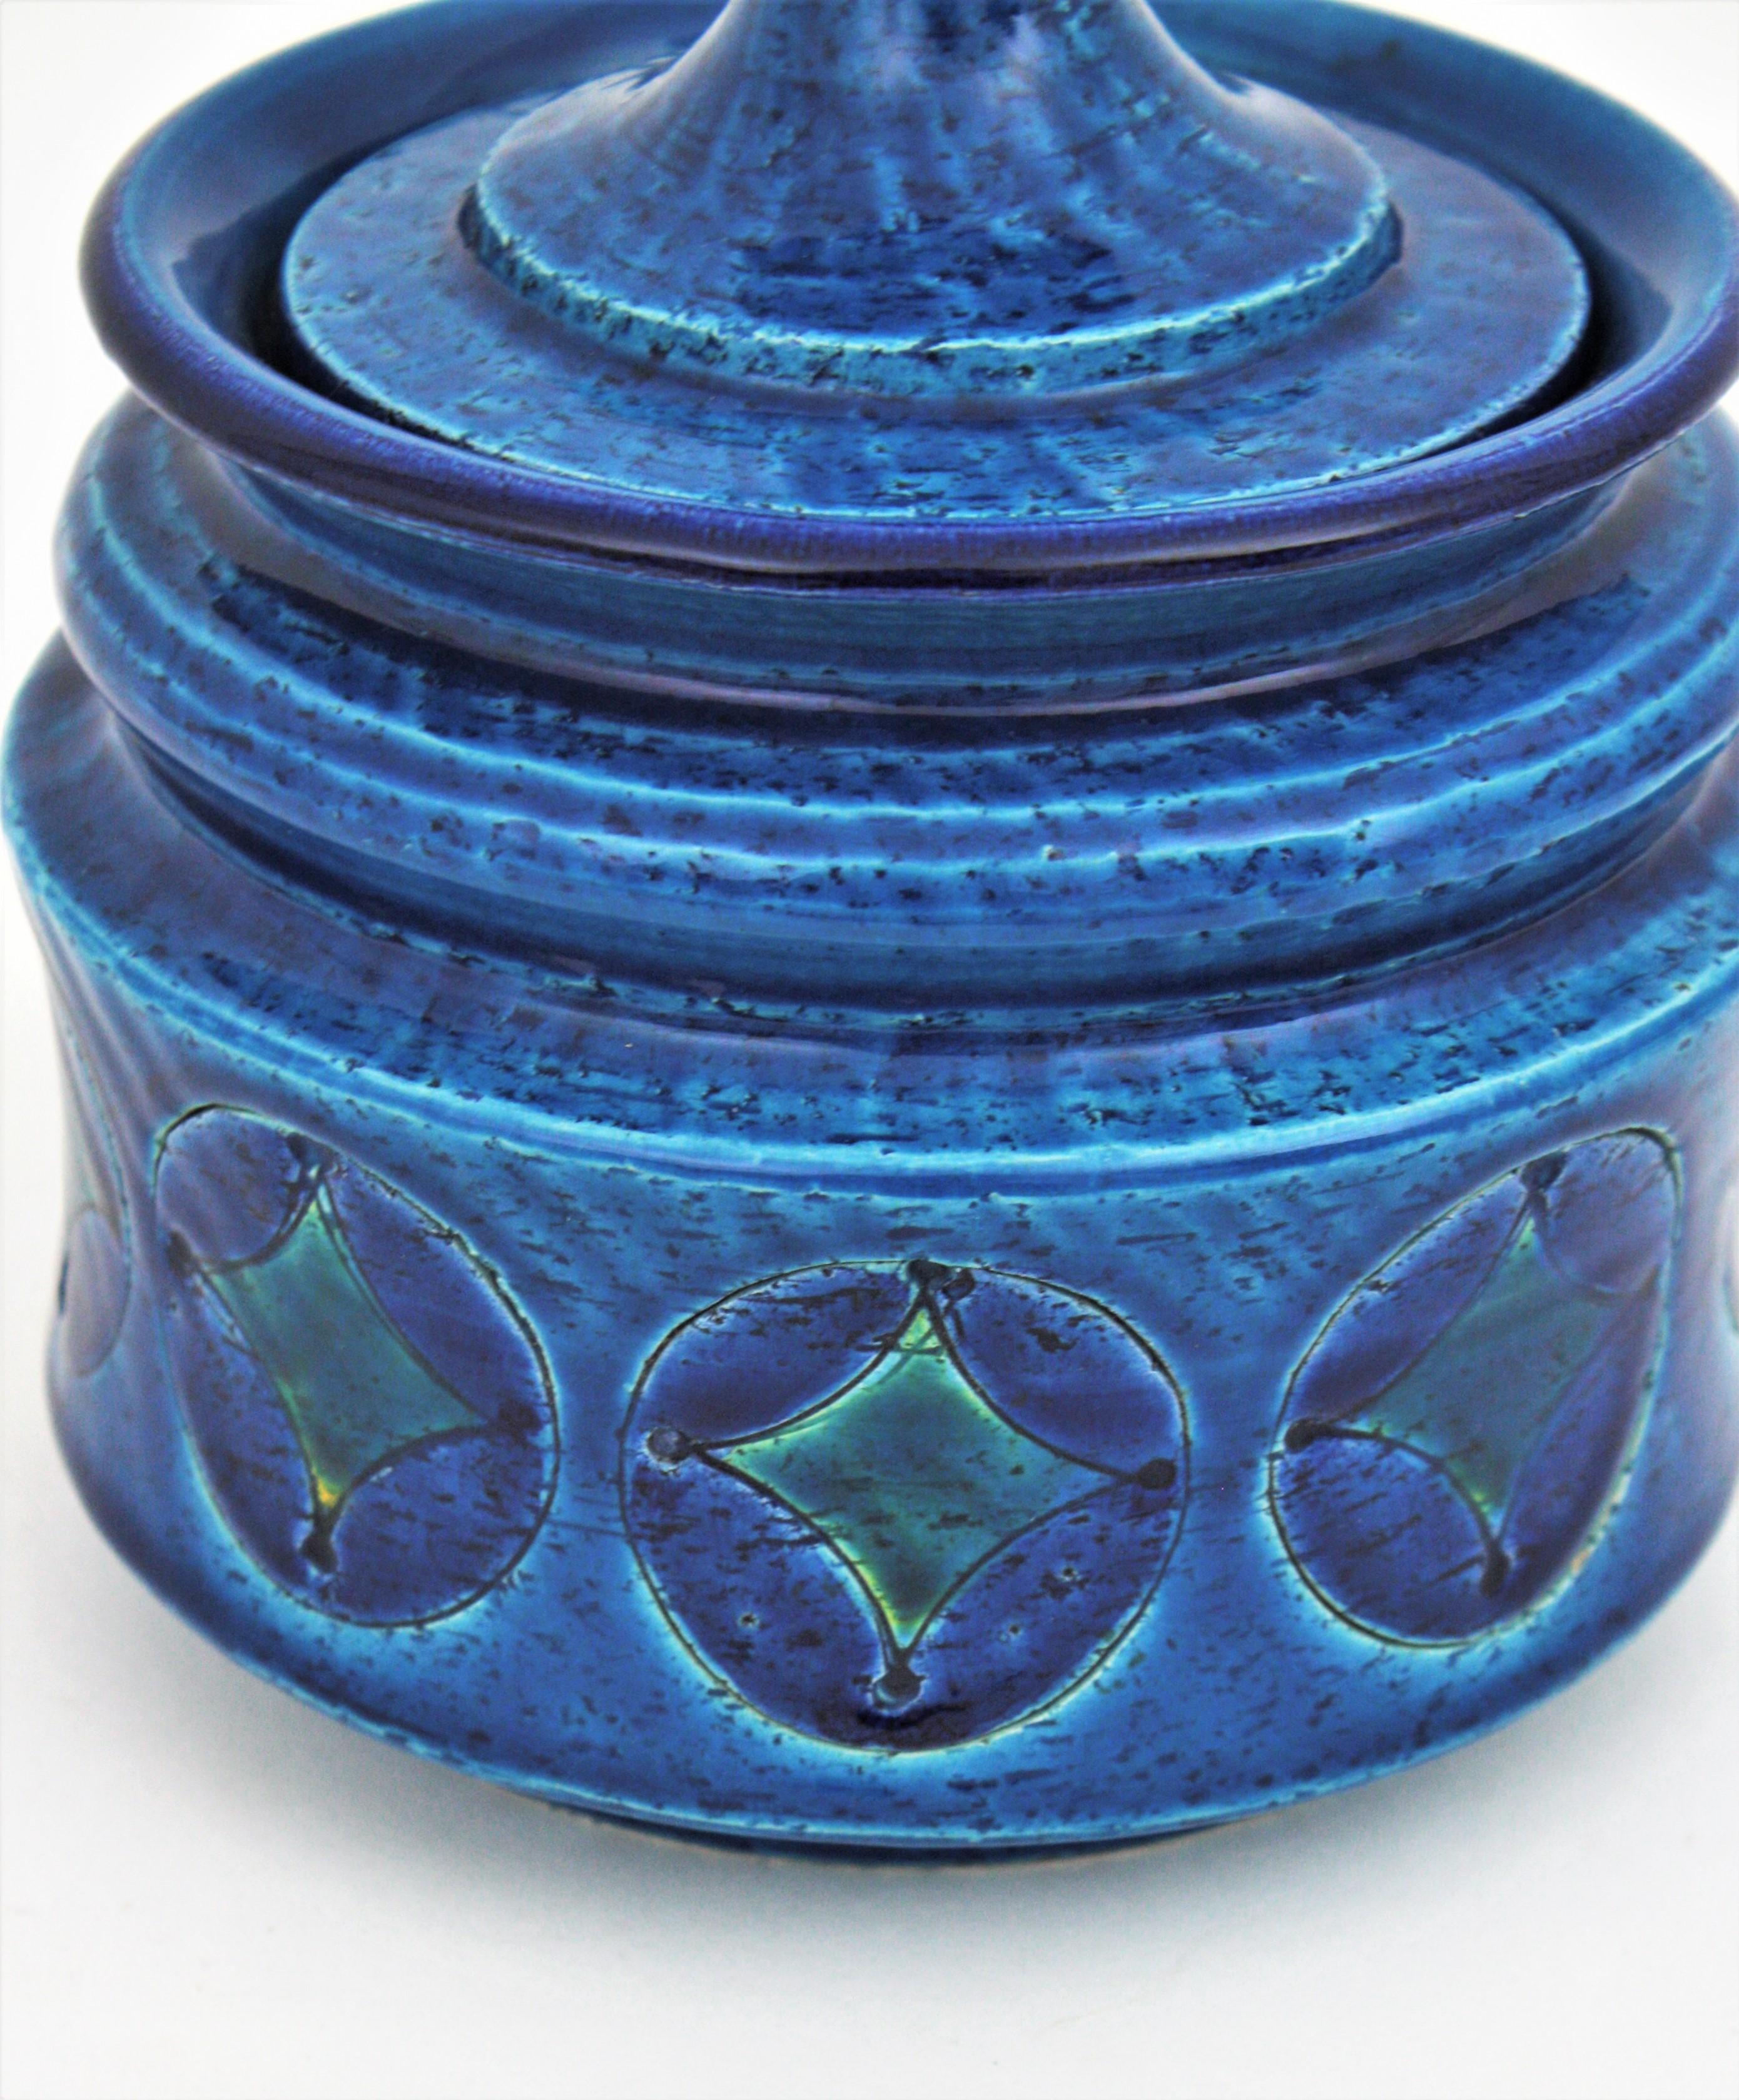 Italian Aldo Londi Bitossi Blue Ceramic Lidded Box / Pot Circles and Rhombus Motif